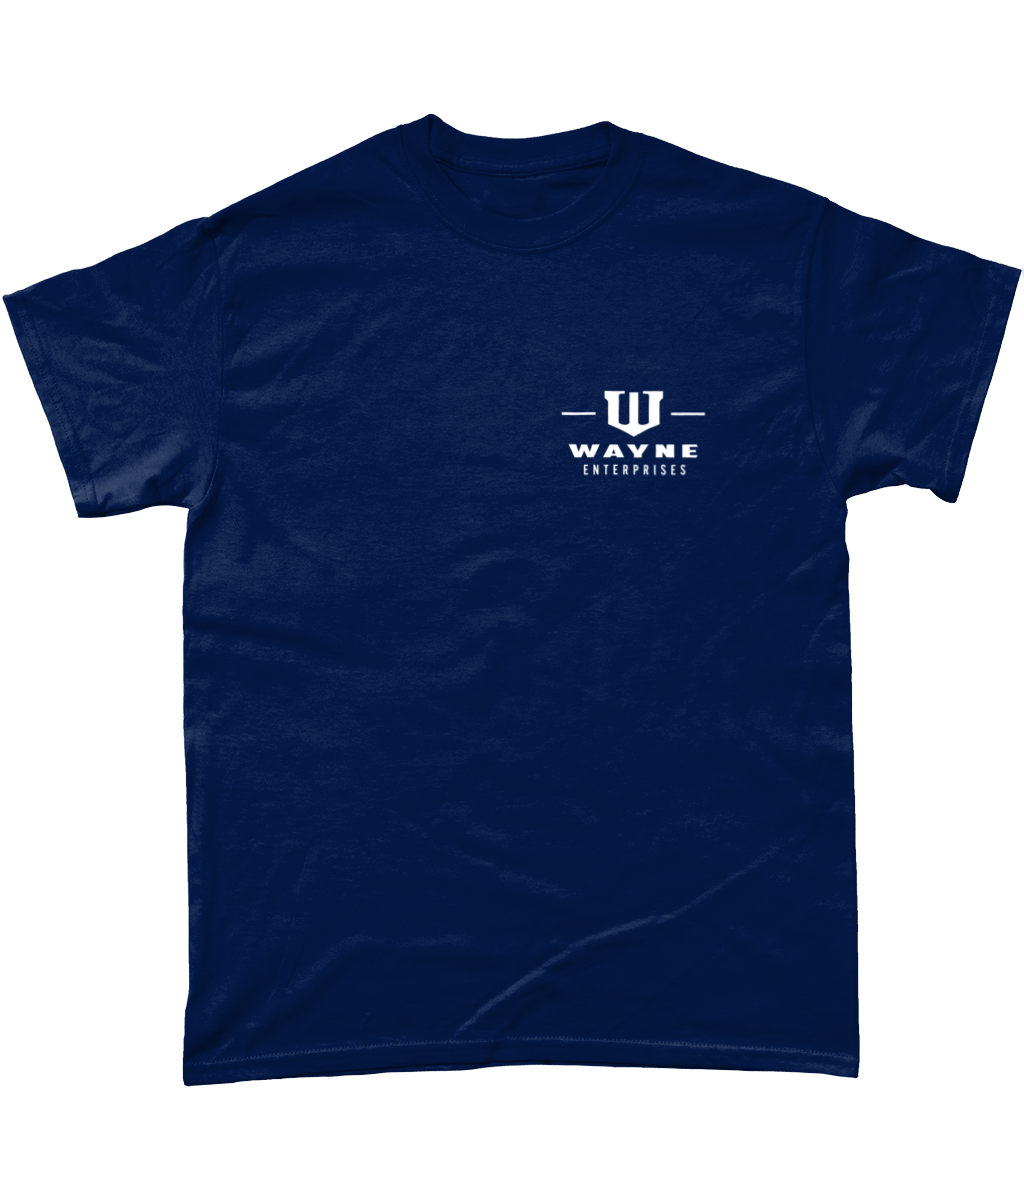 Wayne Enterprises: T-Shirt